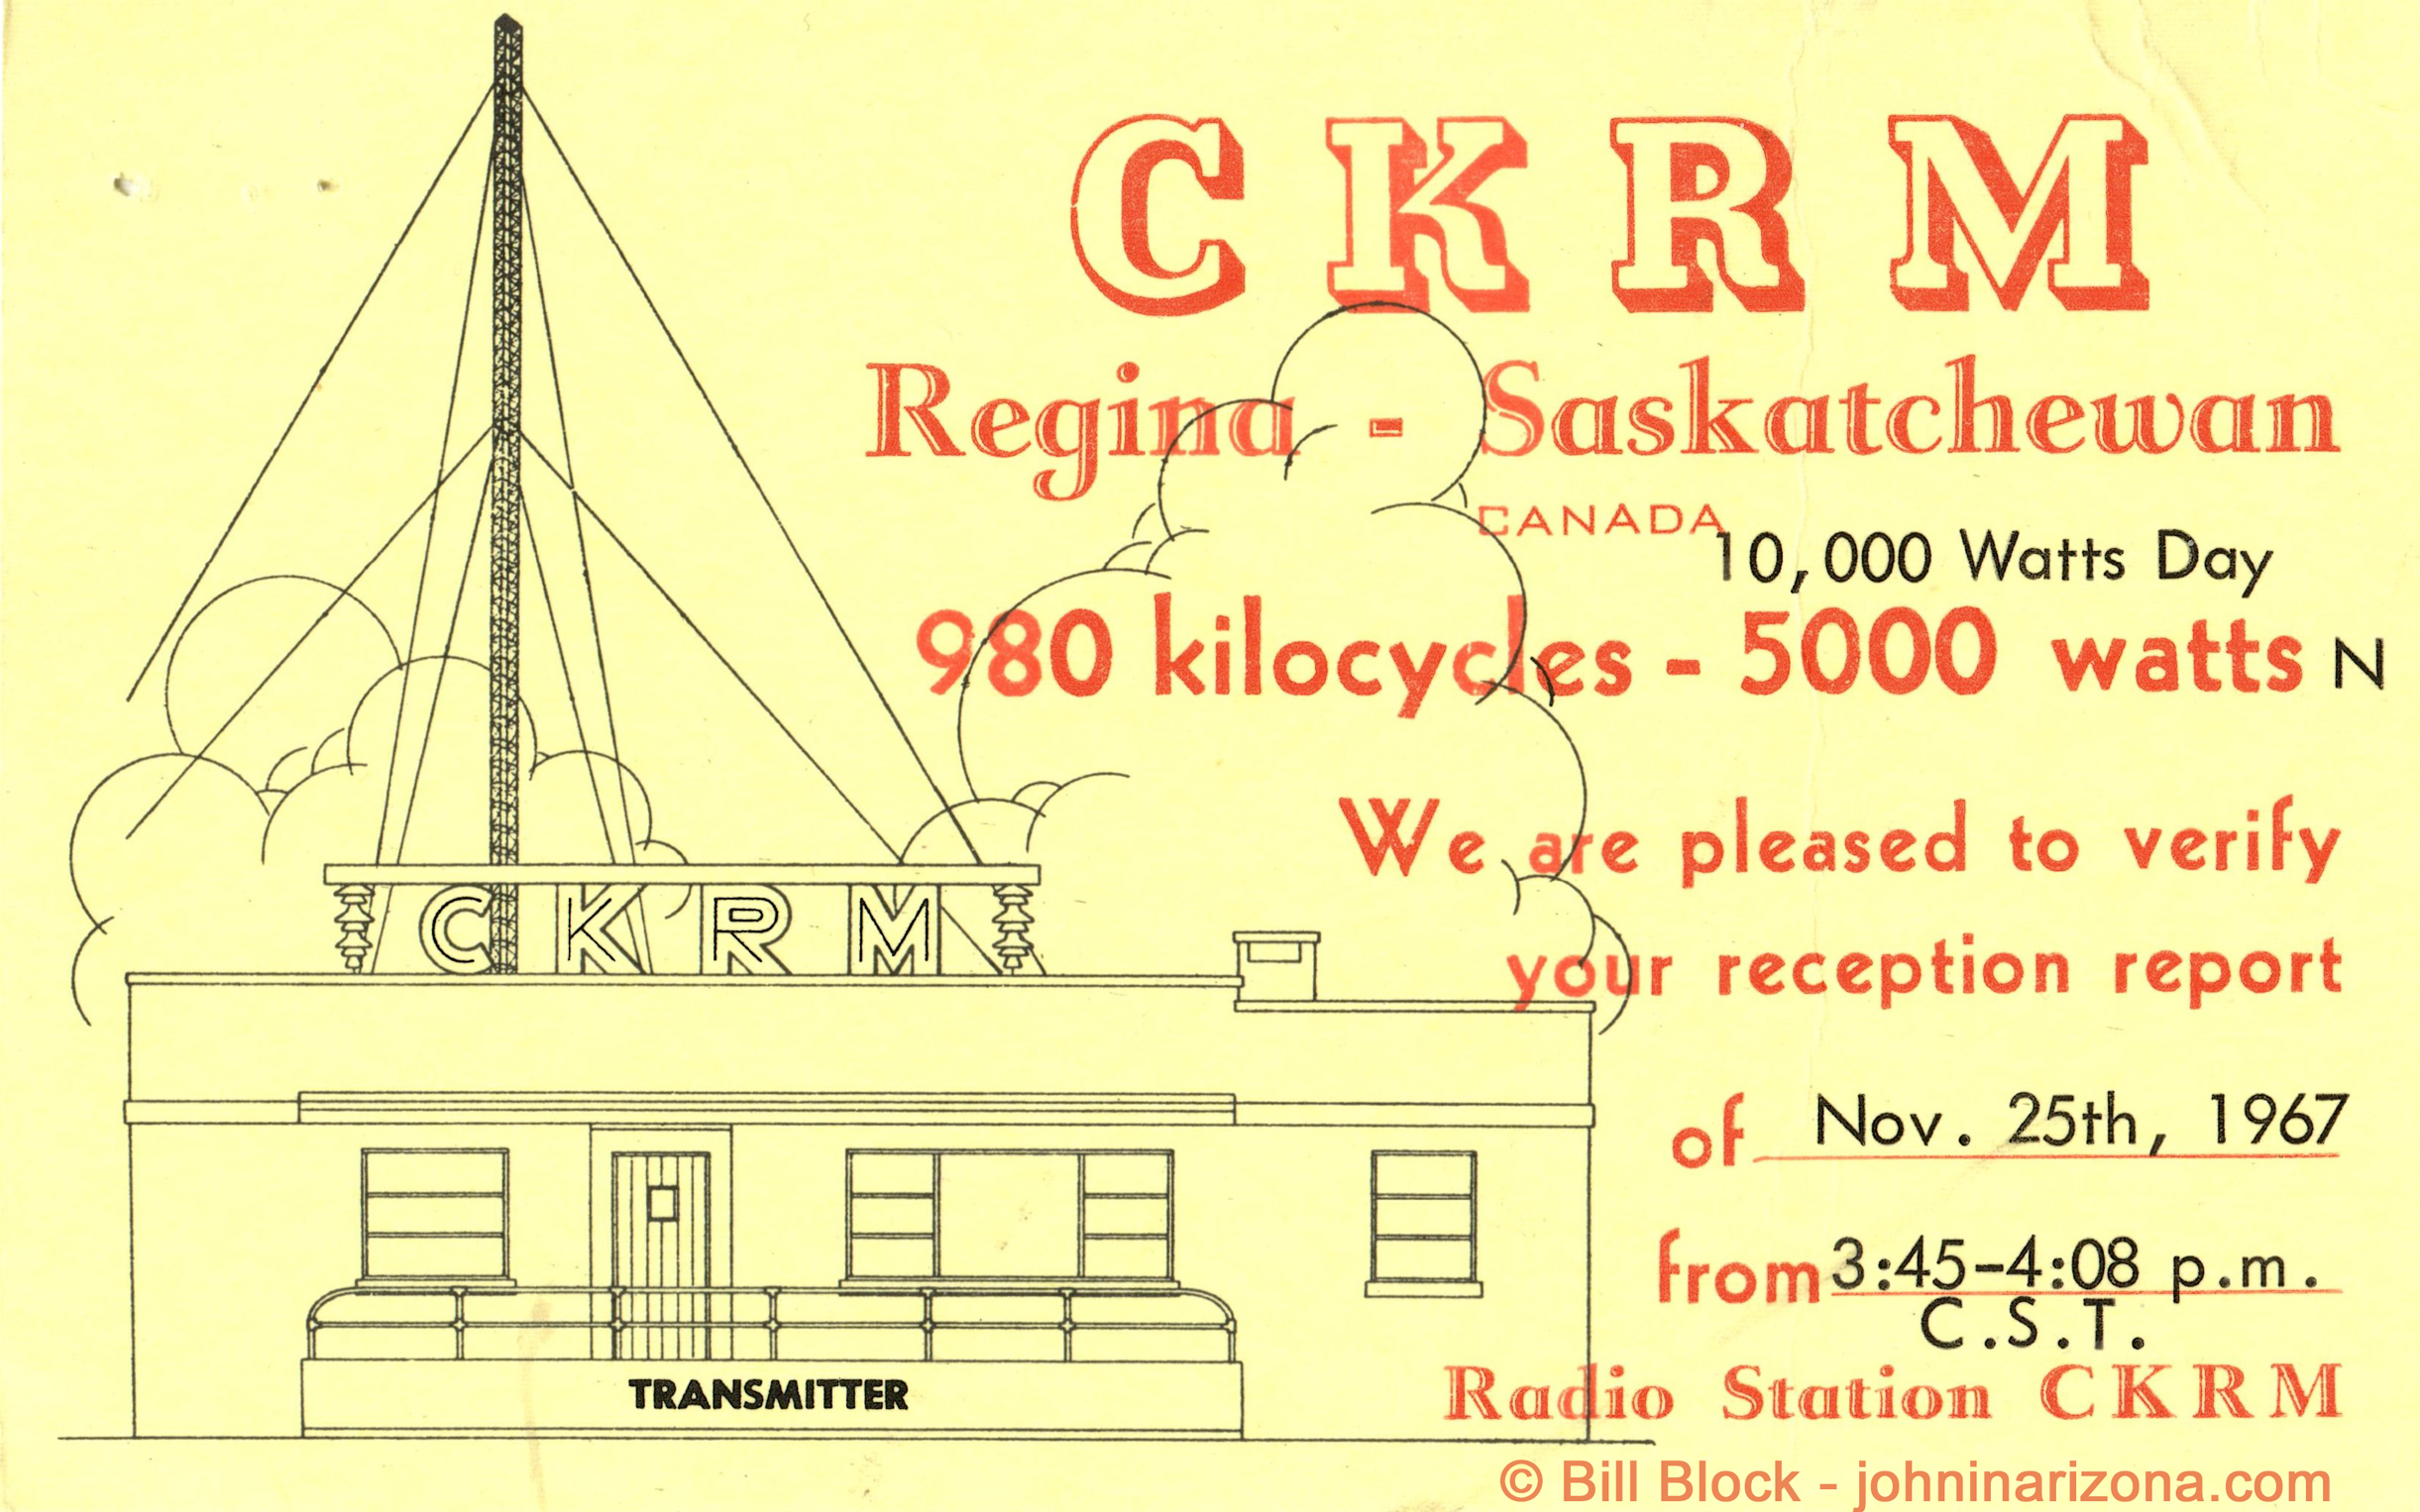 CKRM Radio 980 Regina, Saskatchewan